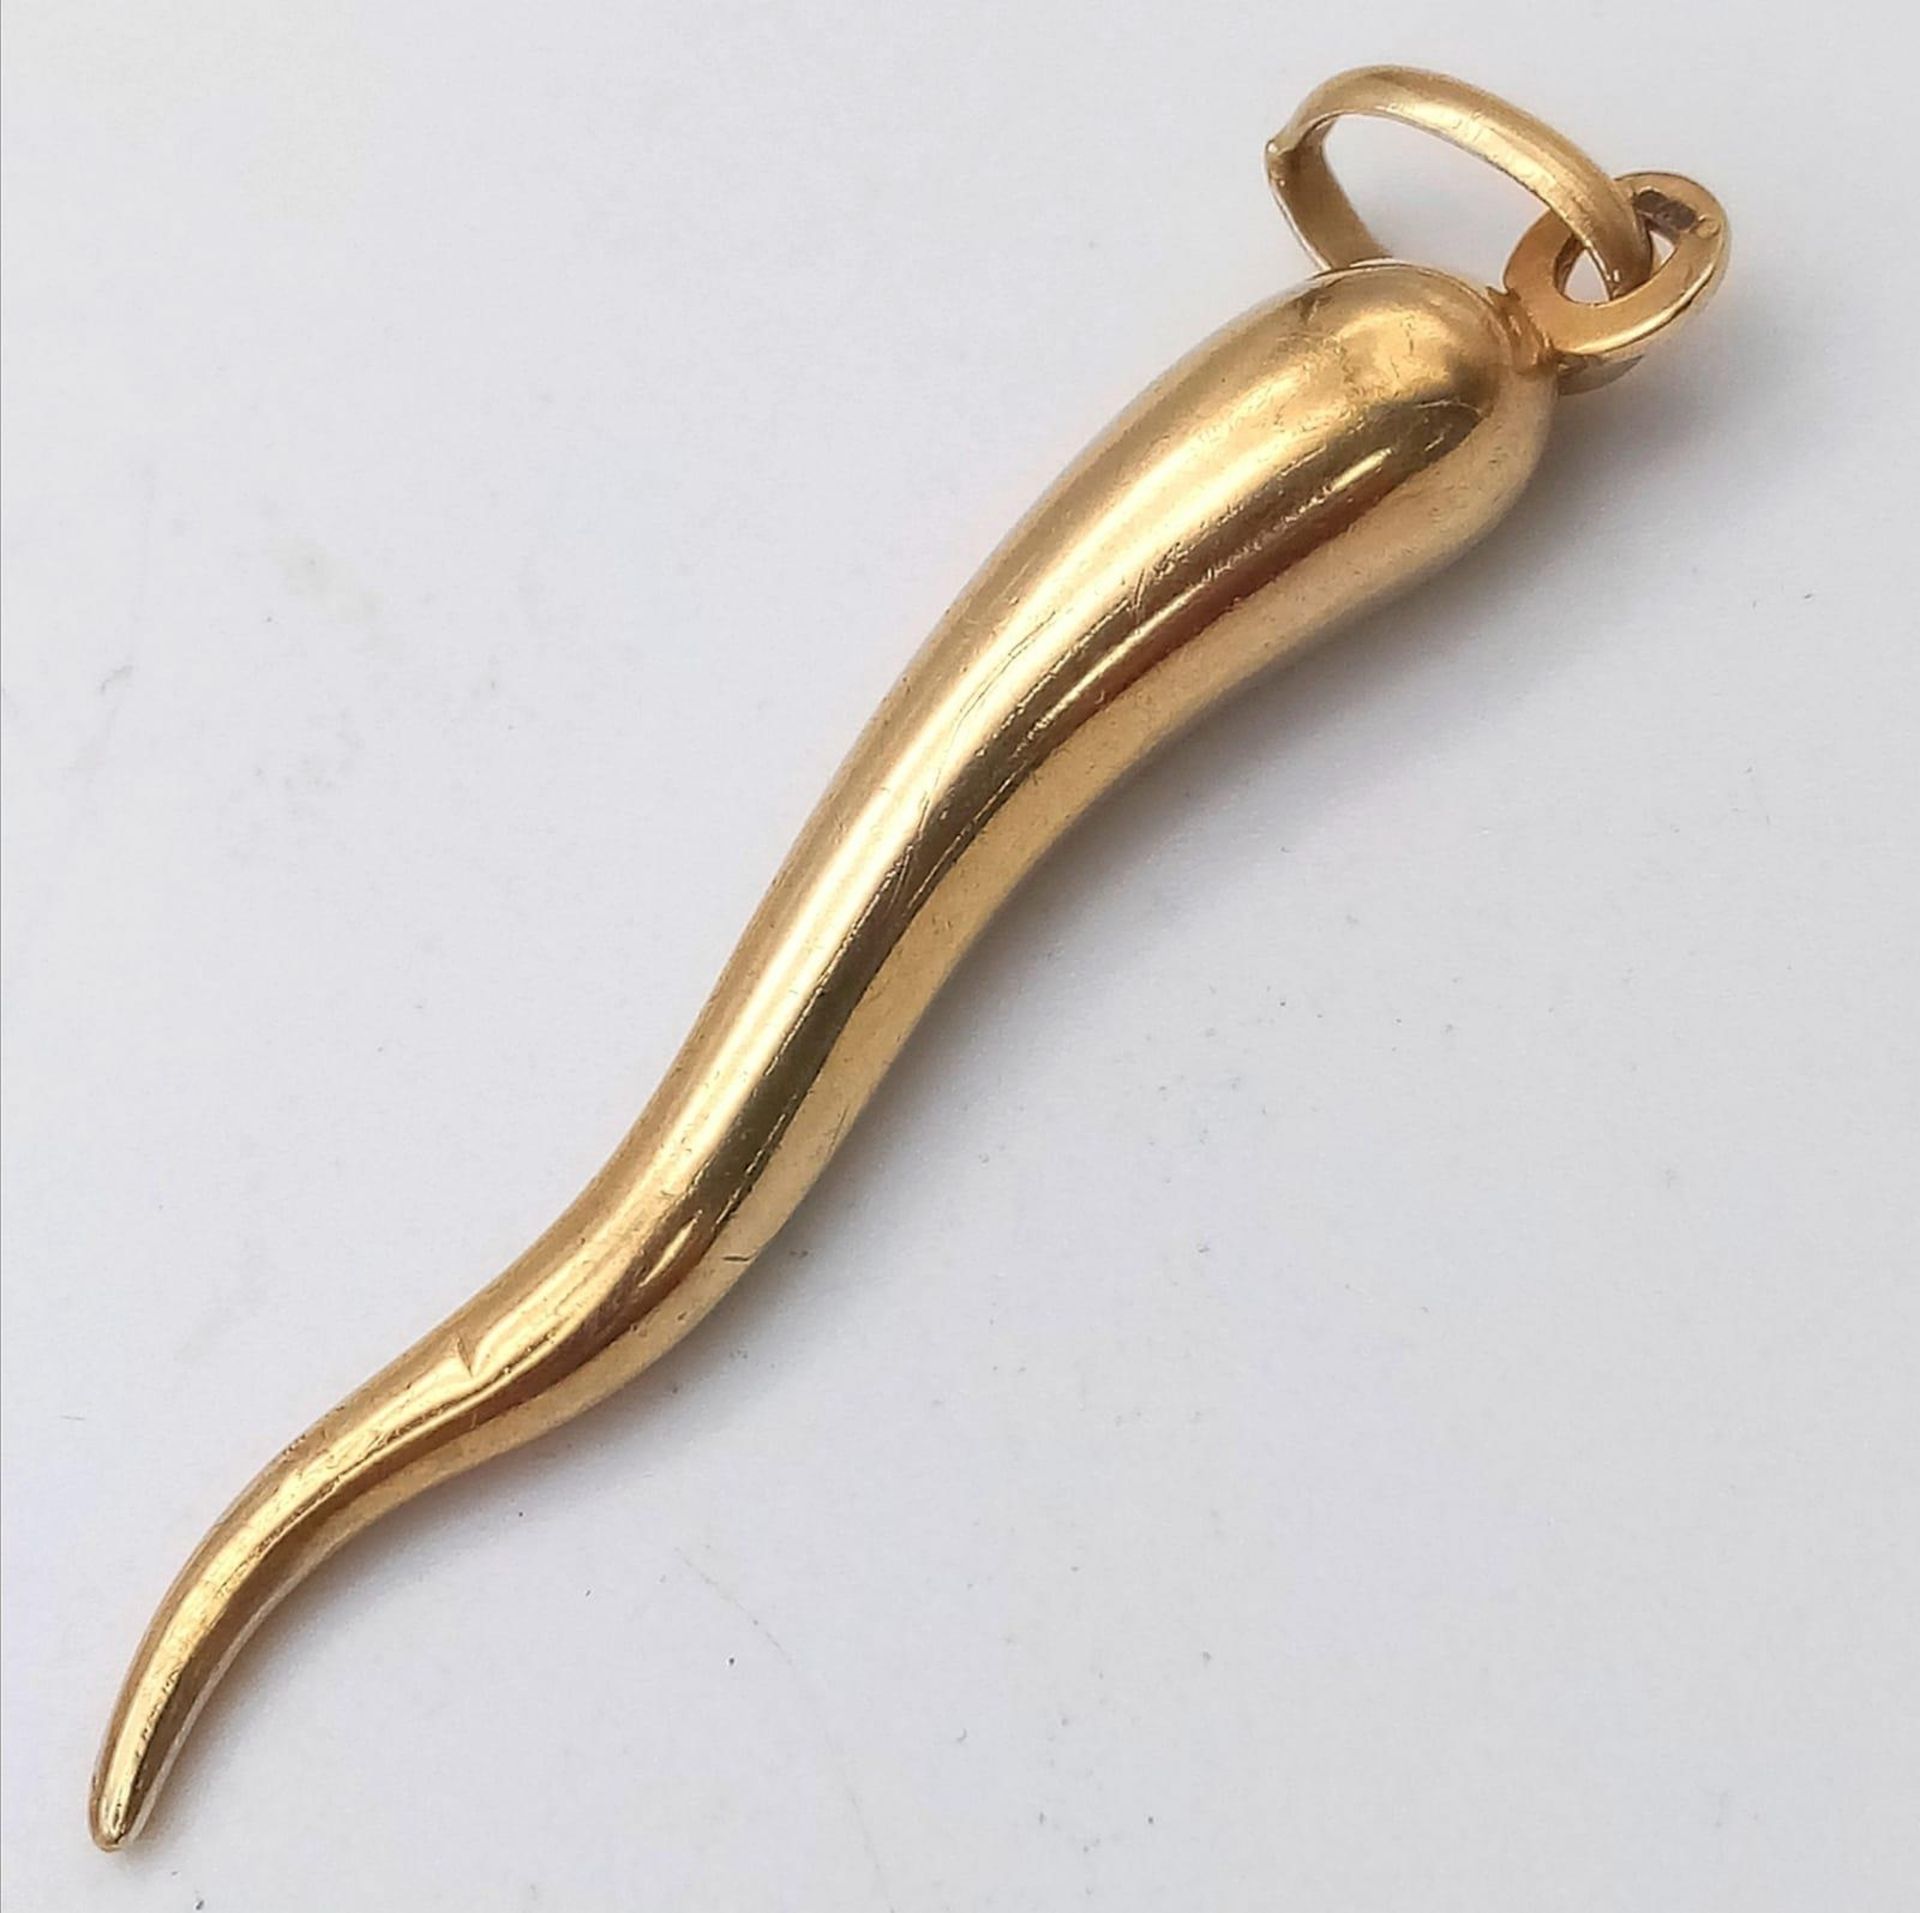 A 9K yellow gold horn of life pendant, 2g, 4.5cm length